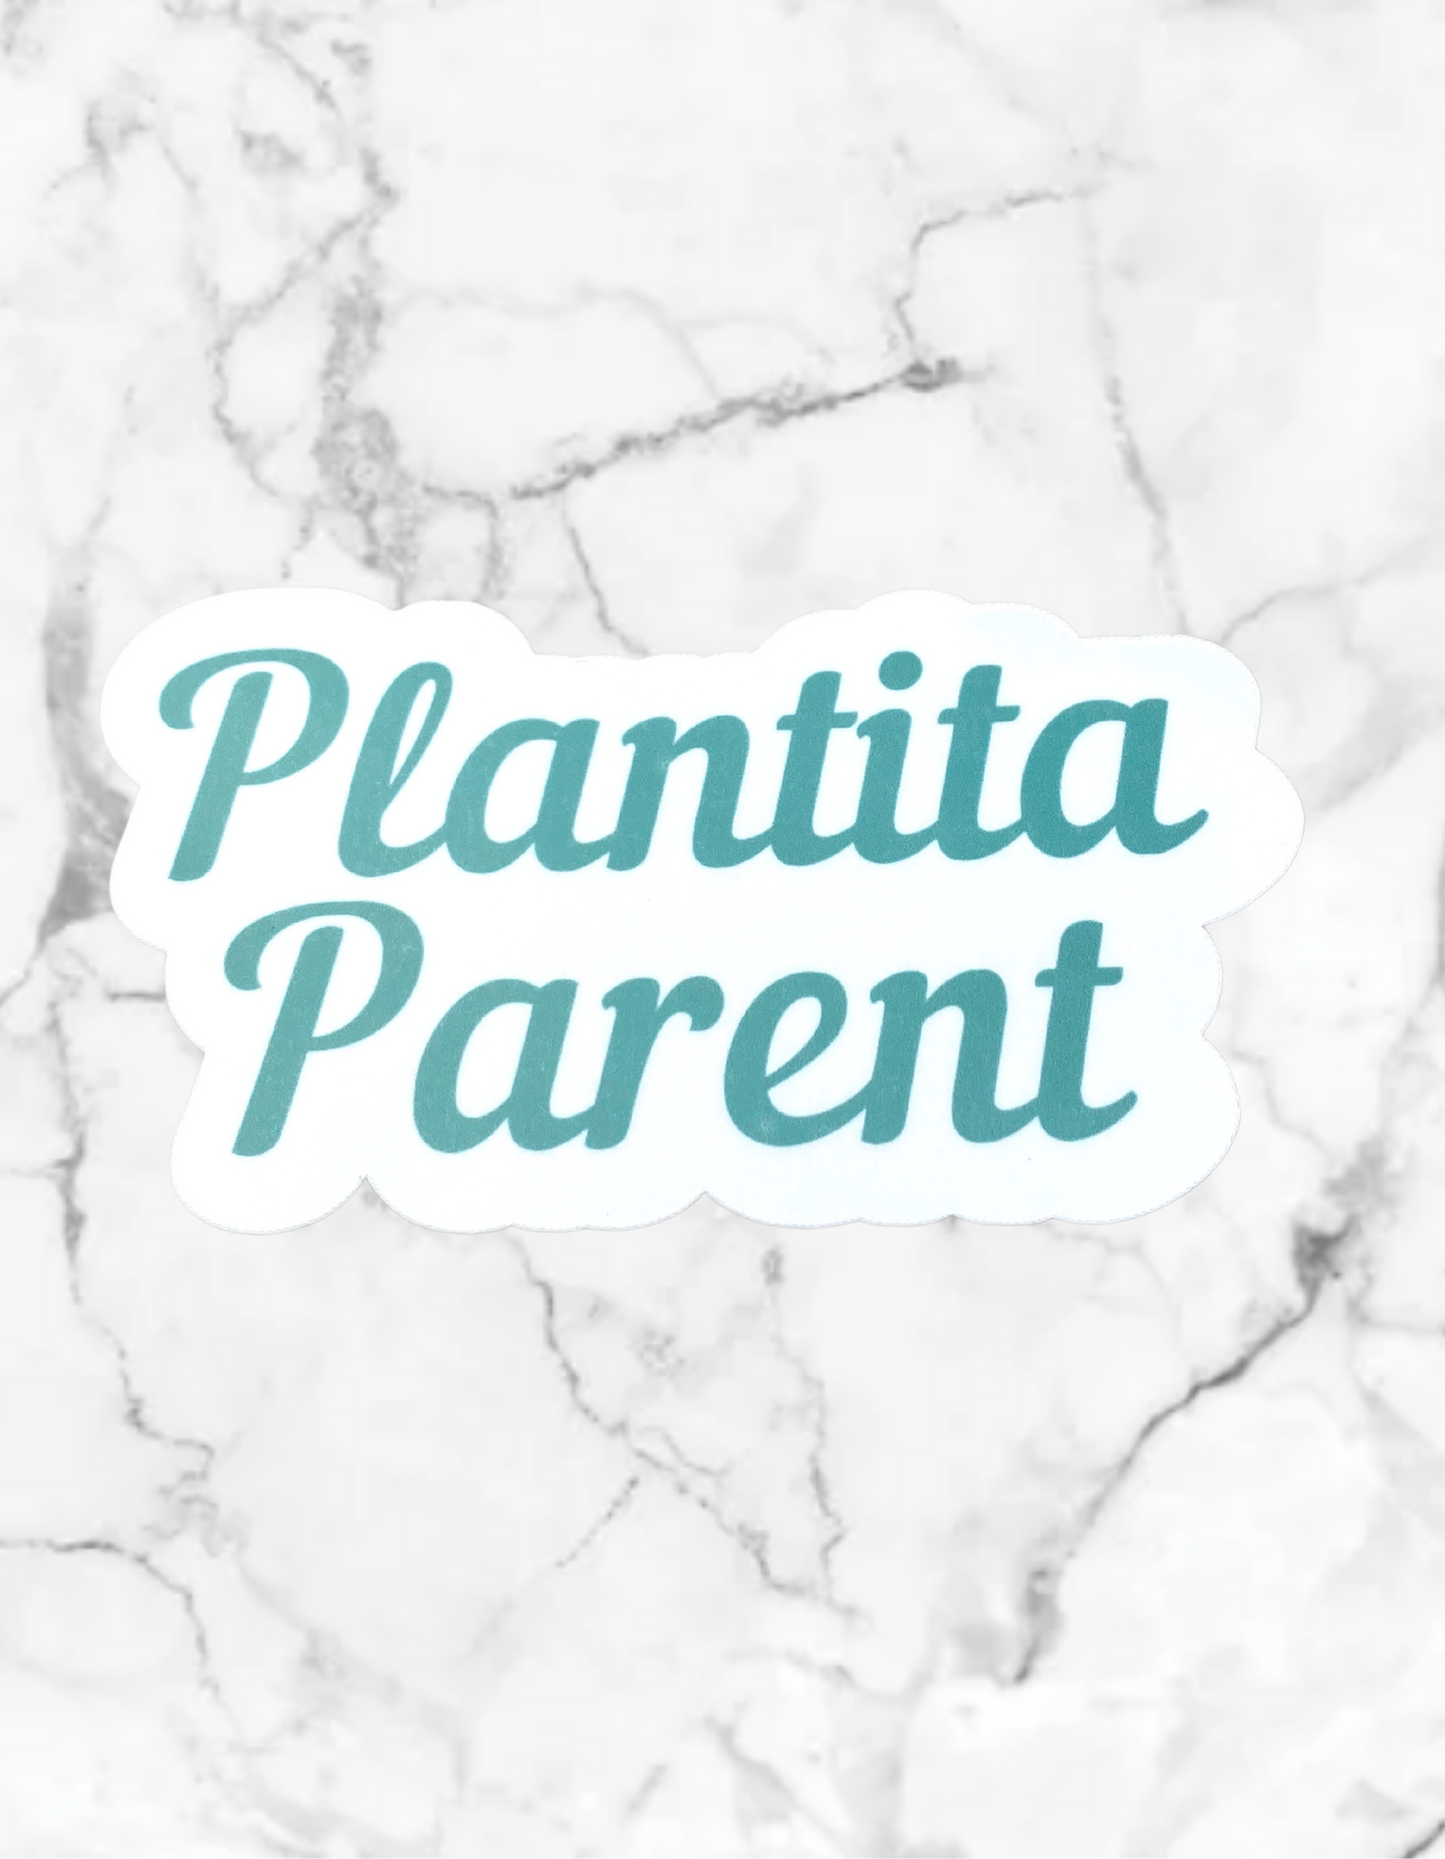 Plantita Parent Sticker